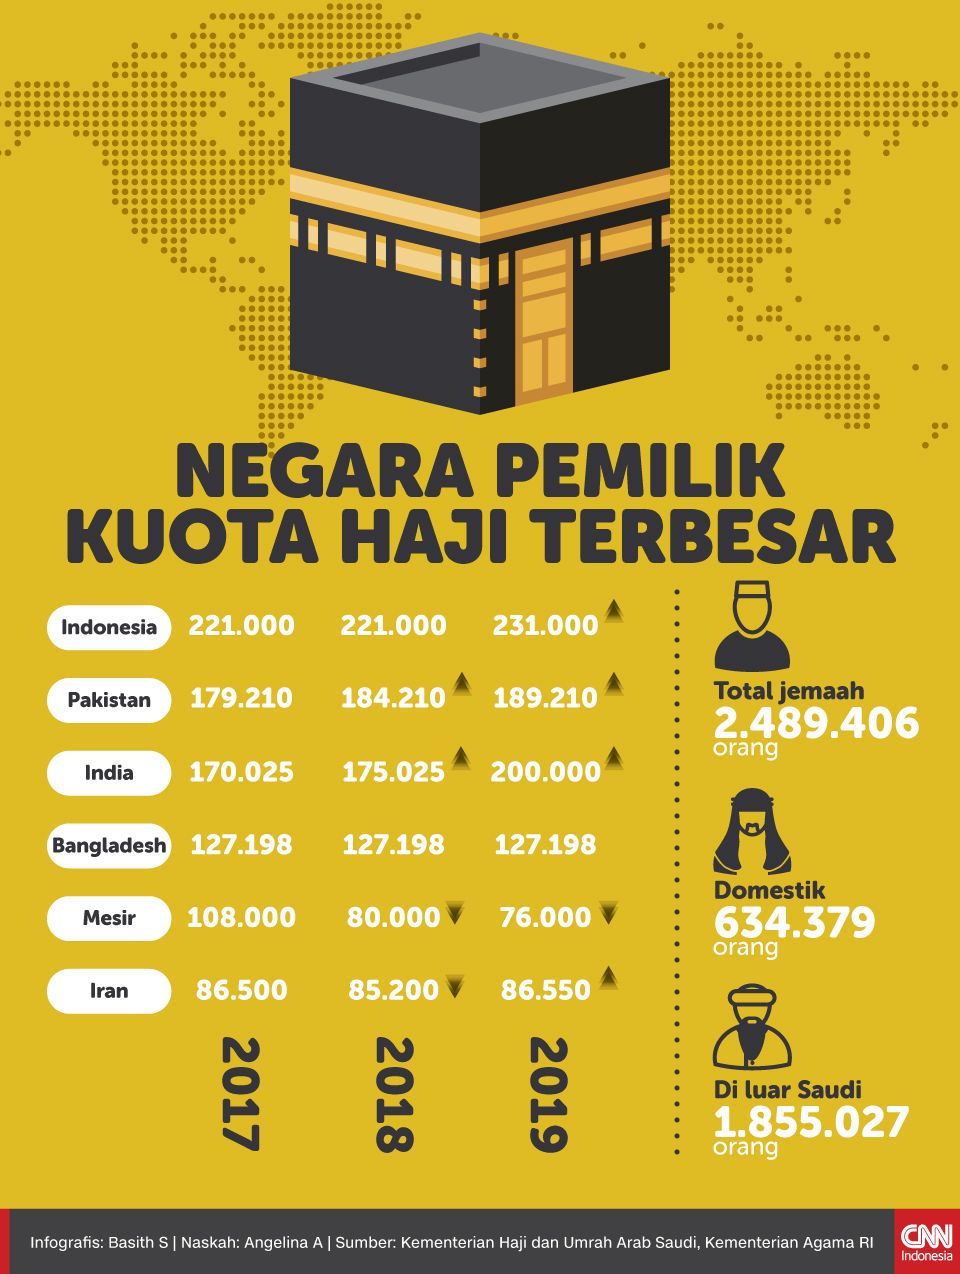 Infografis Negara Pemilik Kuota Haji Terbesar